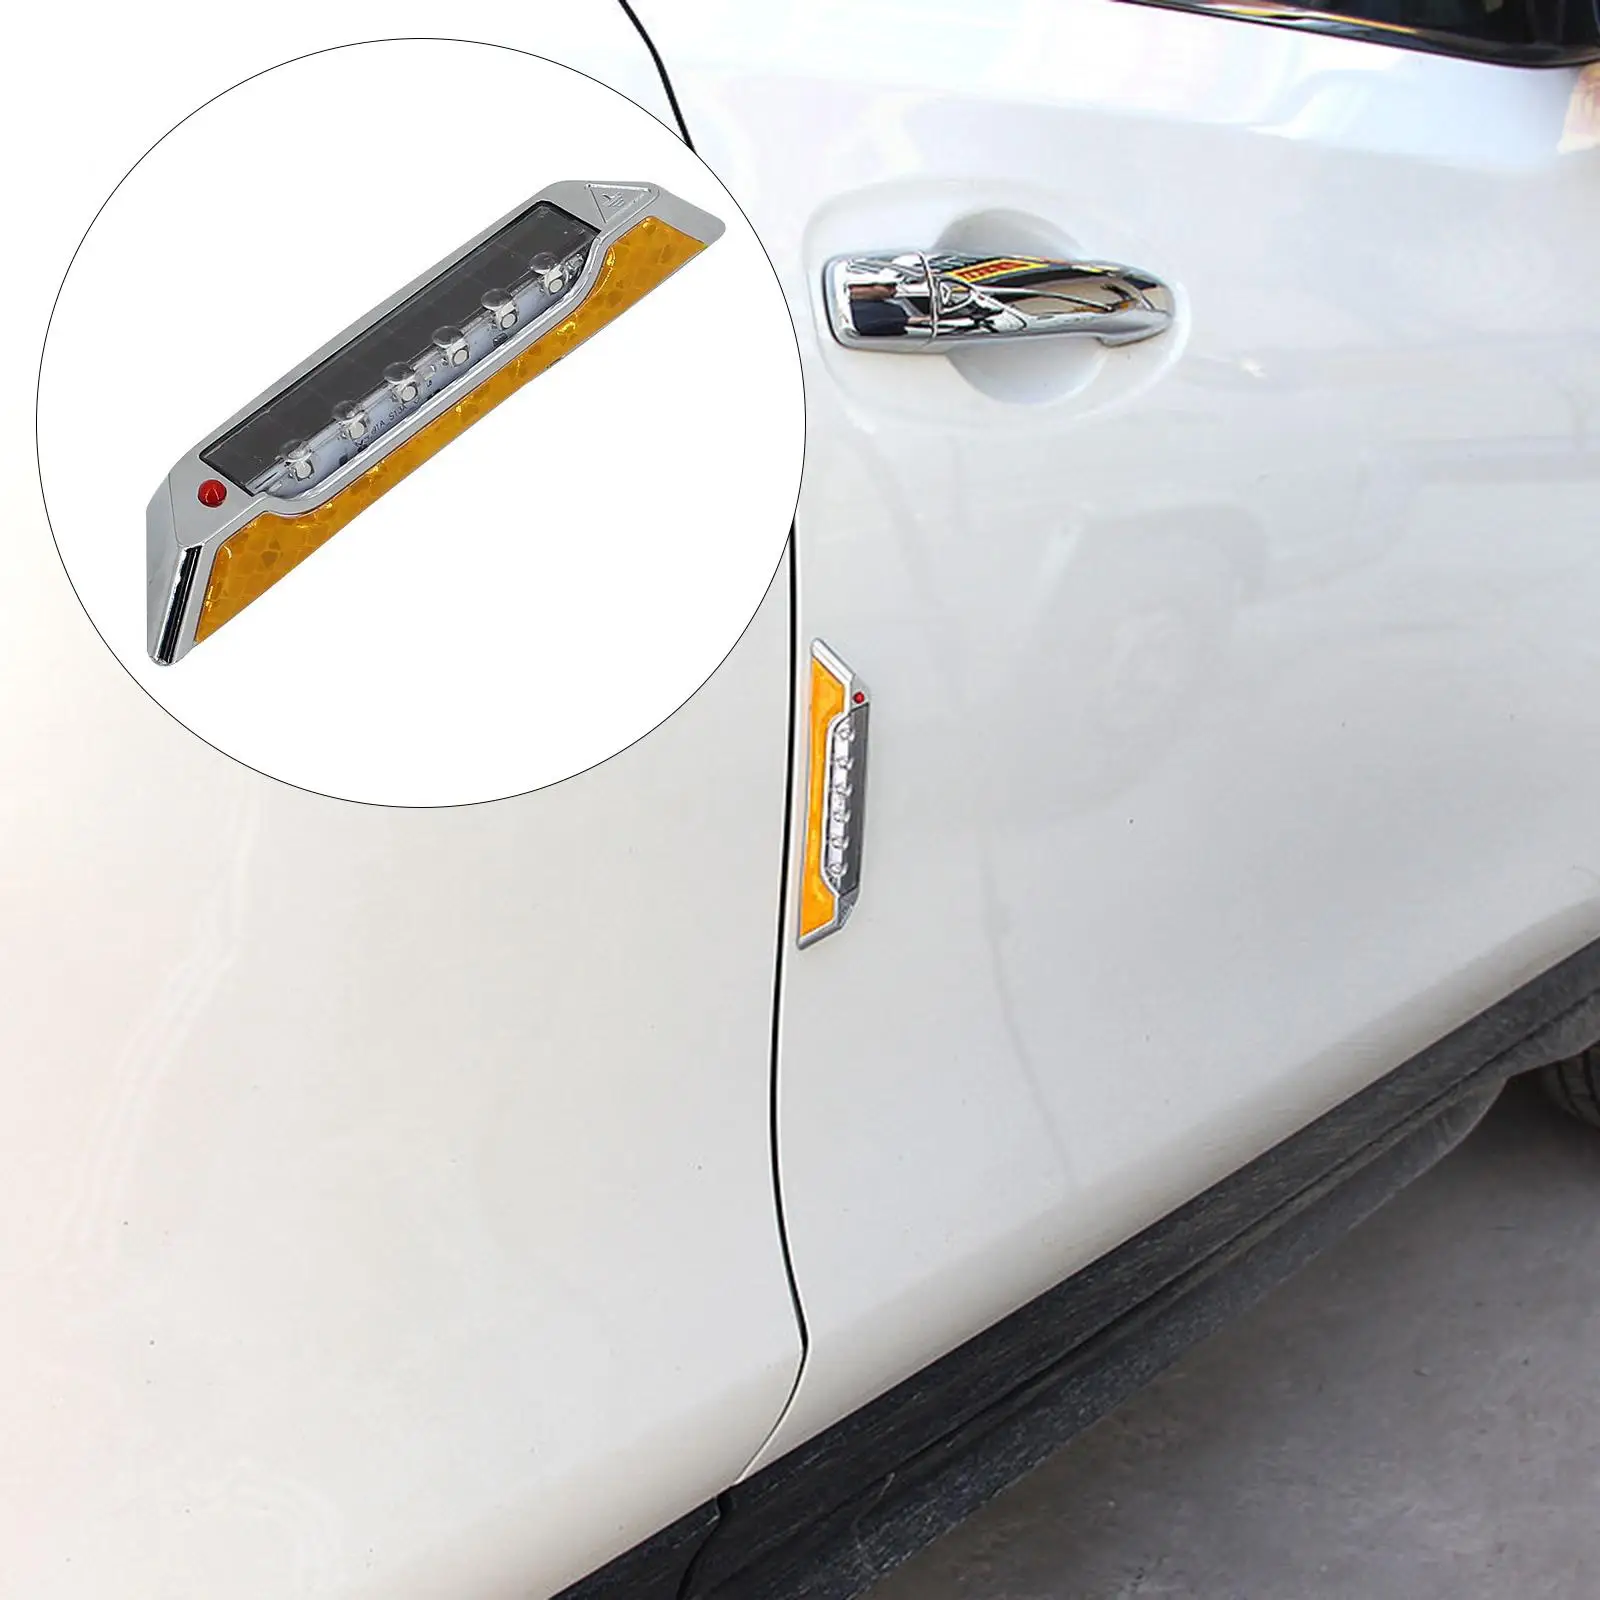 Car LED Warning Light 3.7V Stylish Fit for Trailers Safer Driving Car Doors